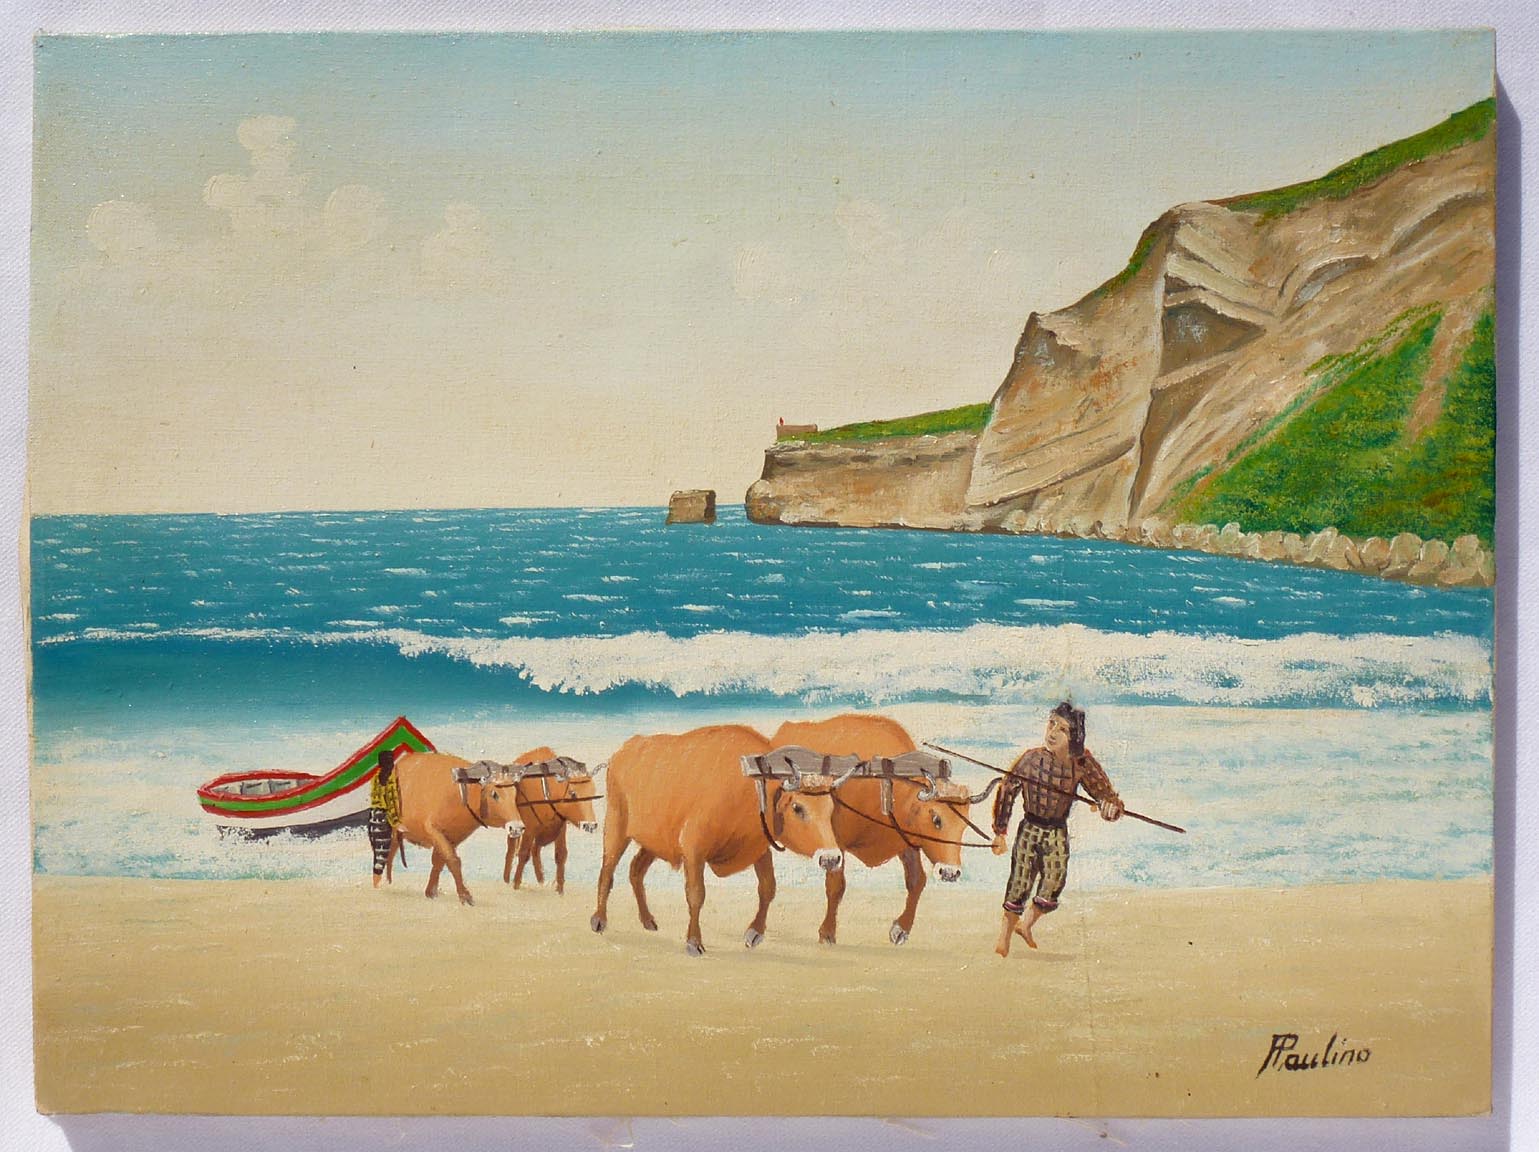 Portuguese fisherman painting